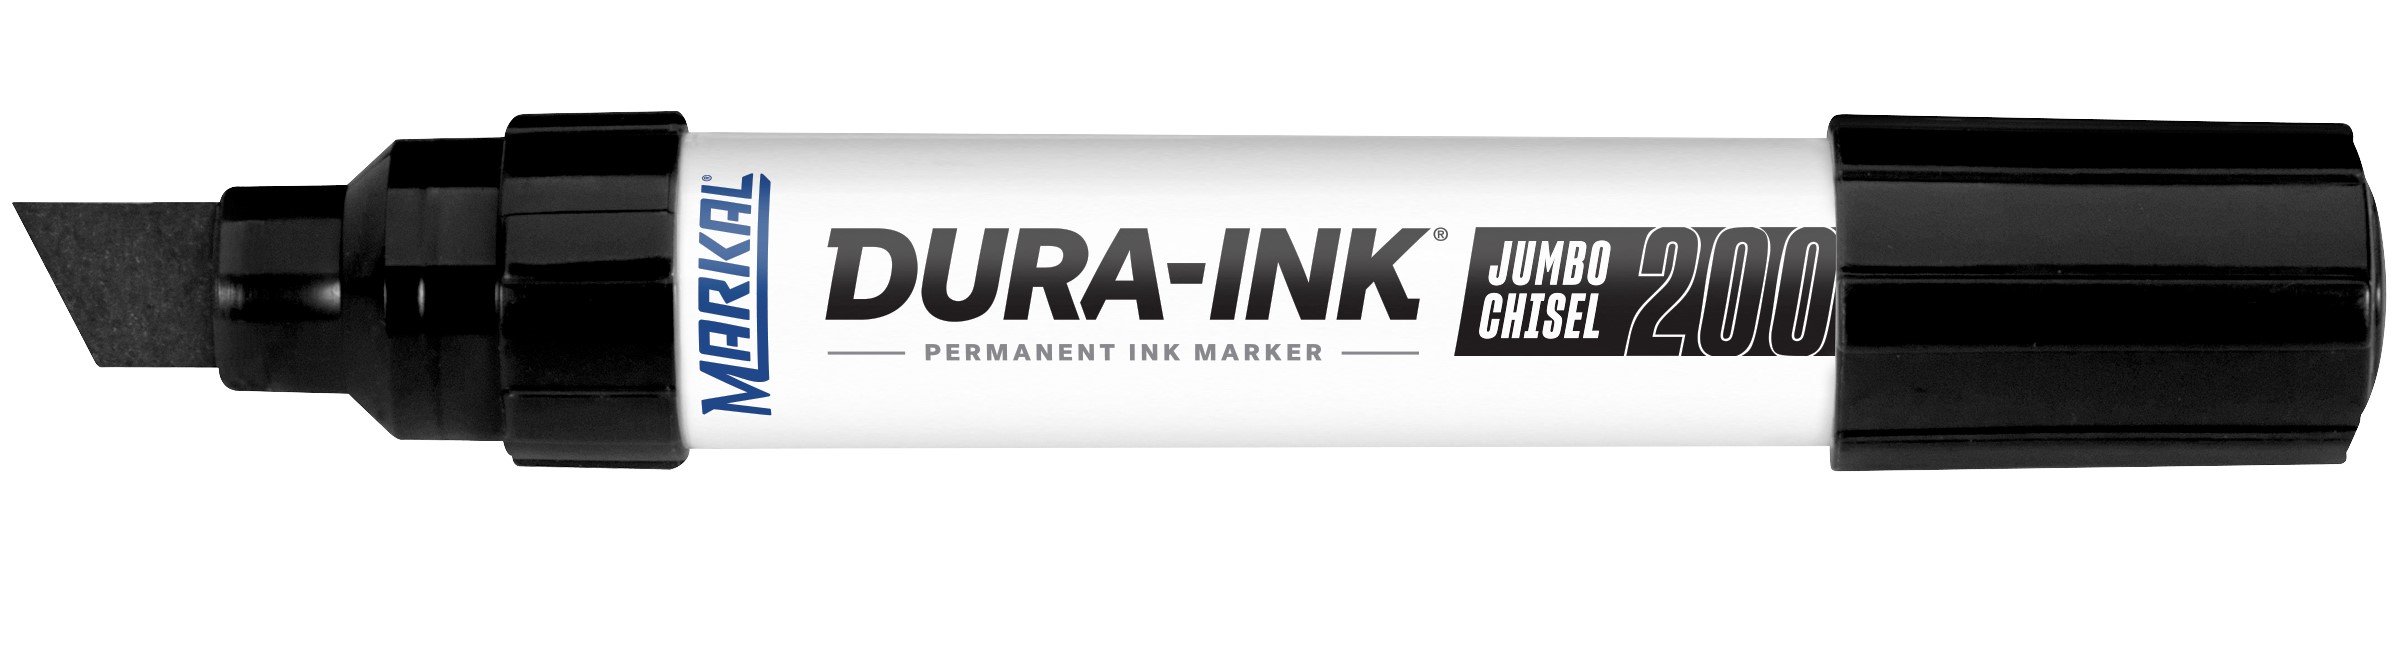 DURA INK JUMBO CHISEL 200